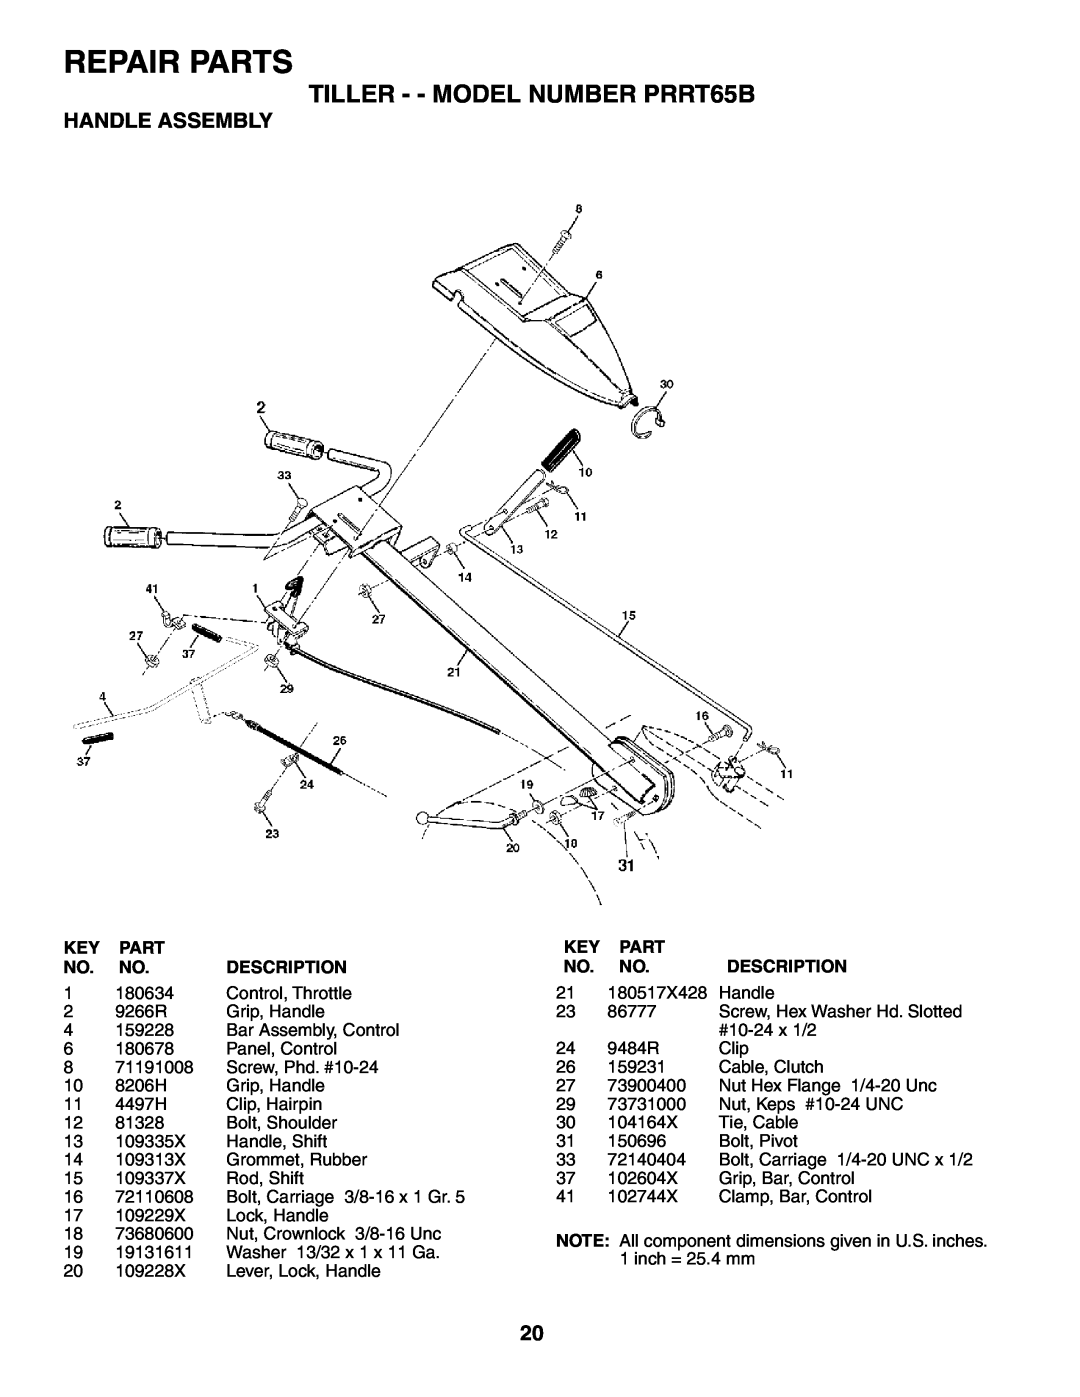 Poulan owner manual Repair Parts, TILLER - - MODEL NUMBER PRRT65B, Handle Assembly, Description 